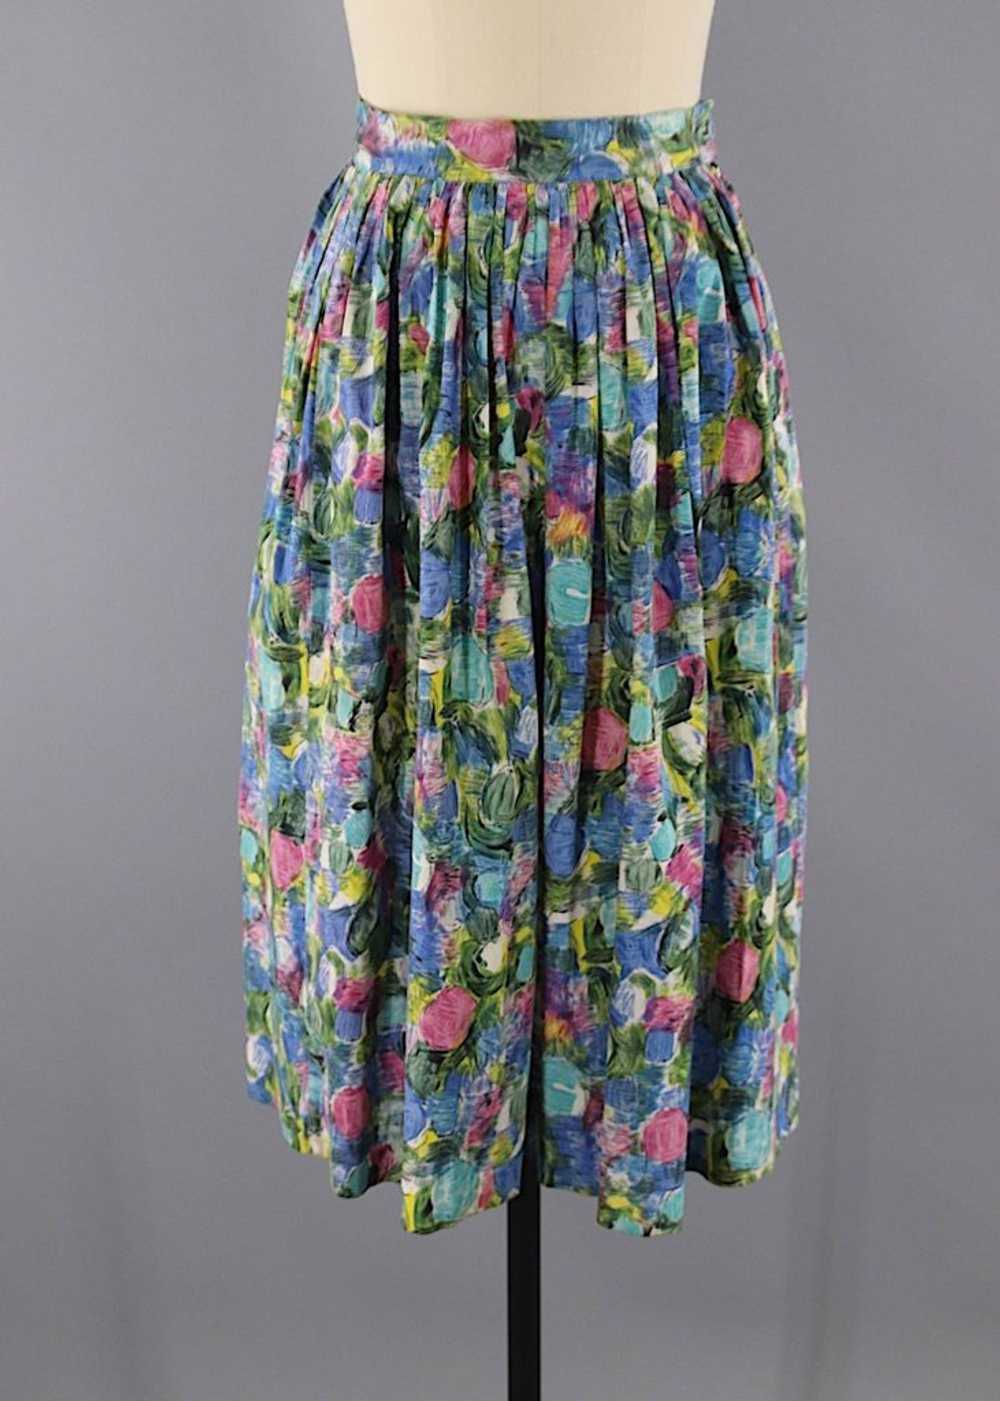 Vintage 1950s Novelty Print Skirt - image 3